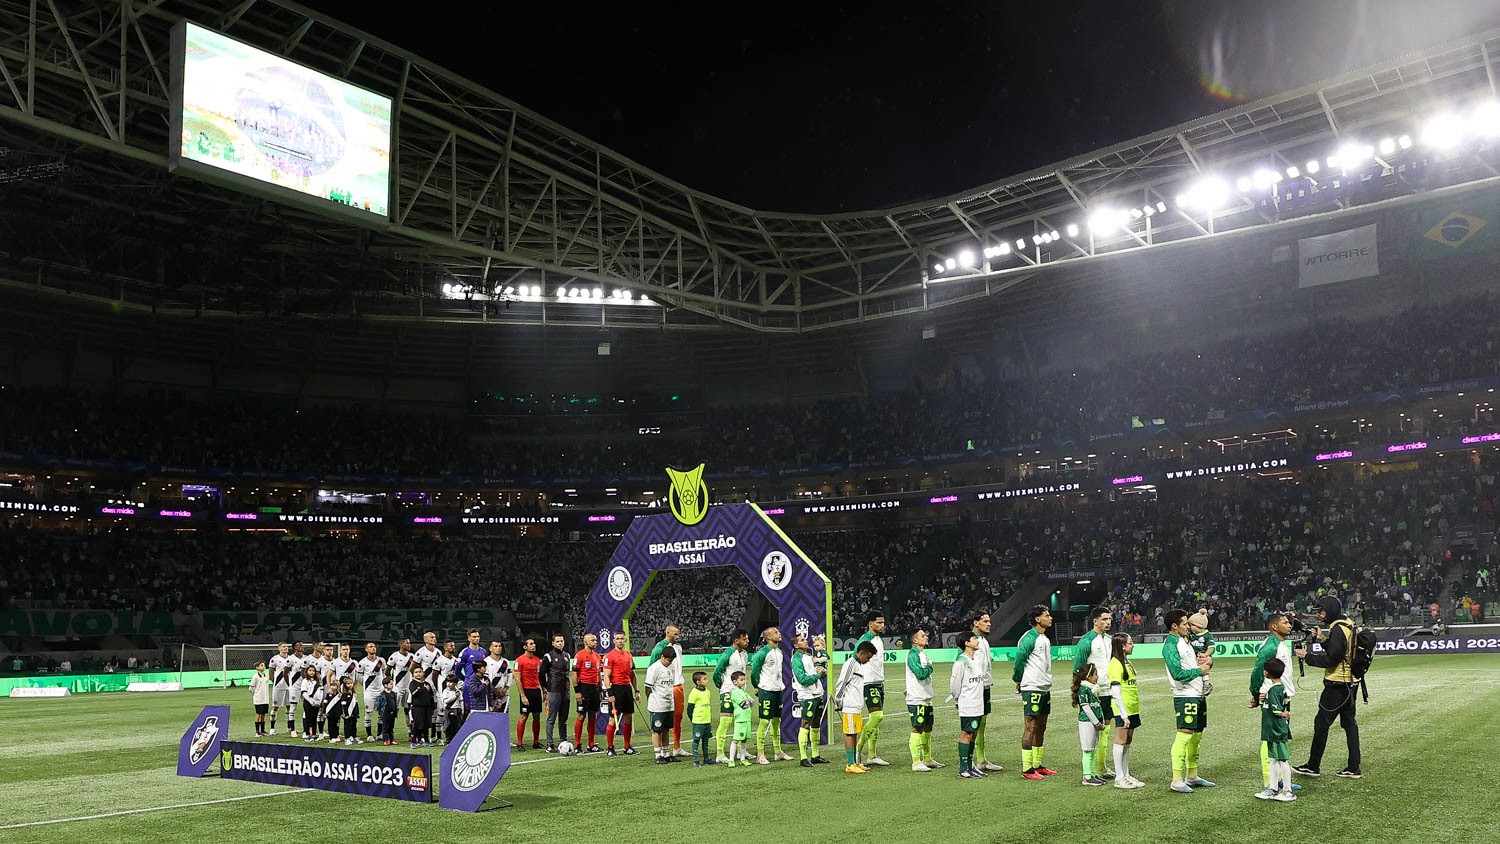 Atletas de Palmeiras e Vasco perfilados para o protocolo de início de partida no Allianz Parque. Foto:César Greco/Palmeiras